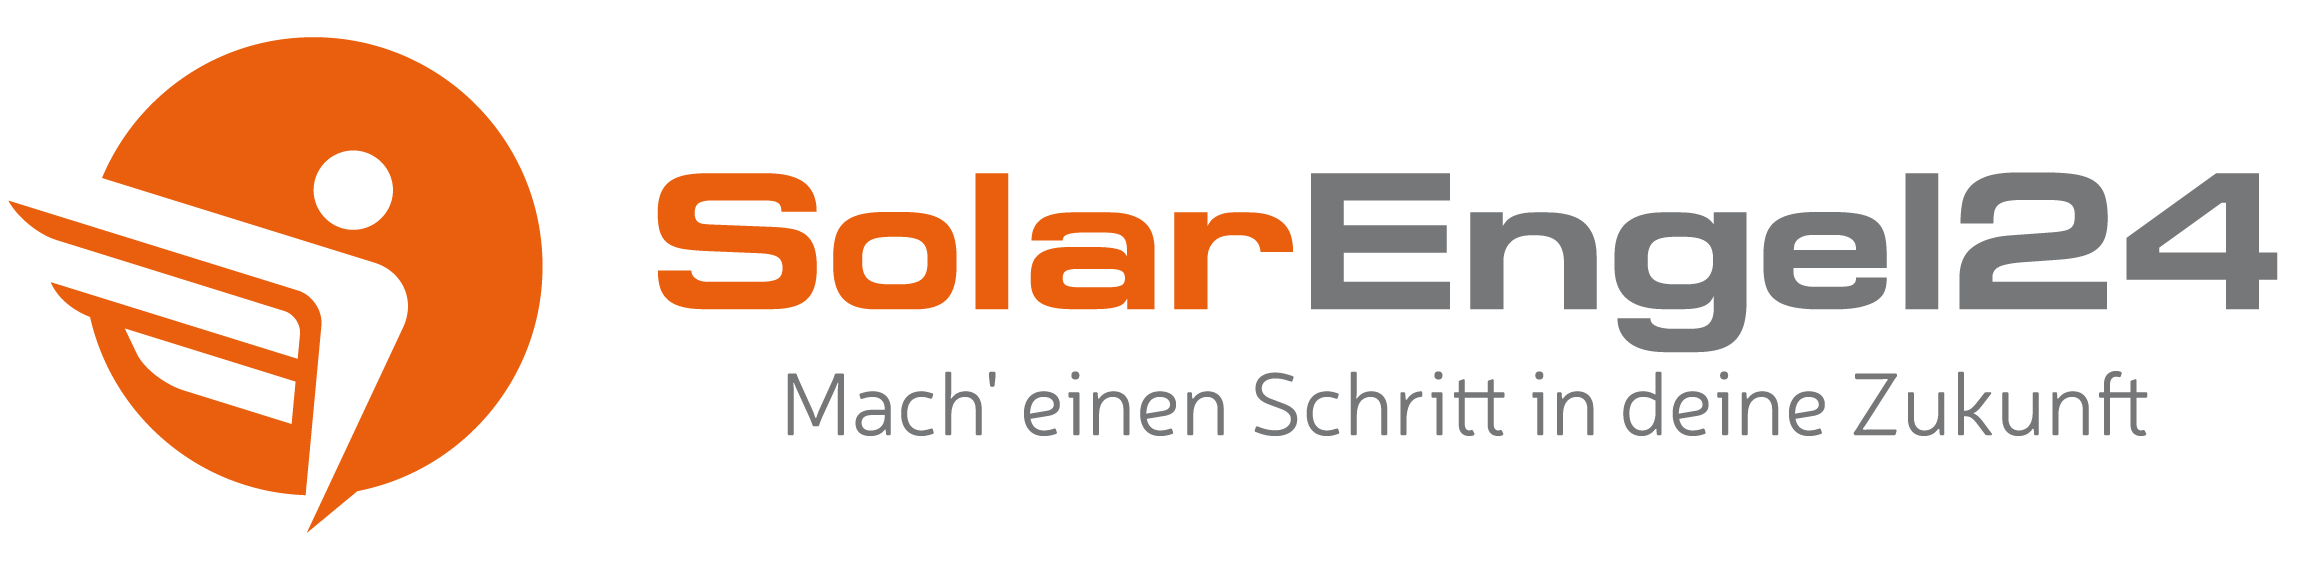 SolarEngel24